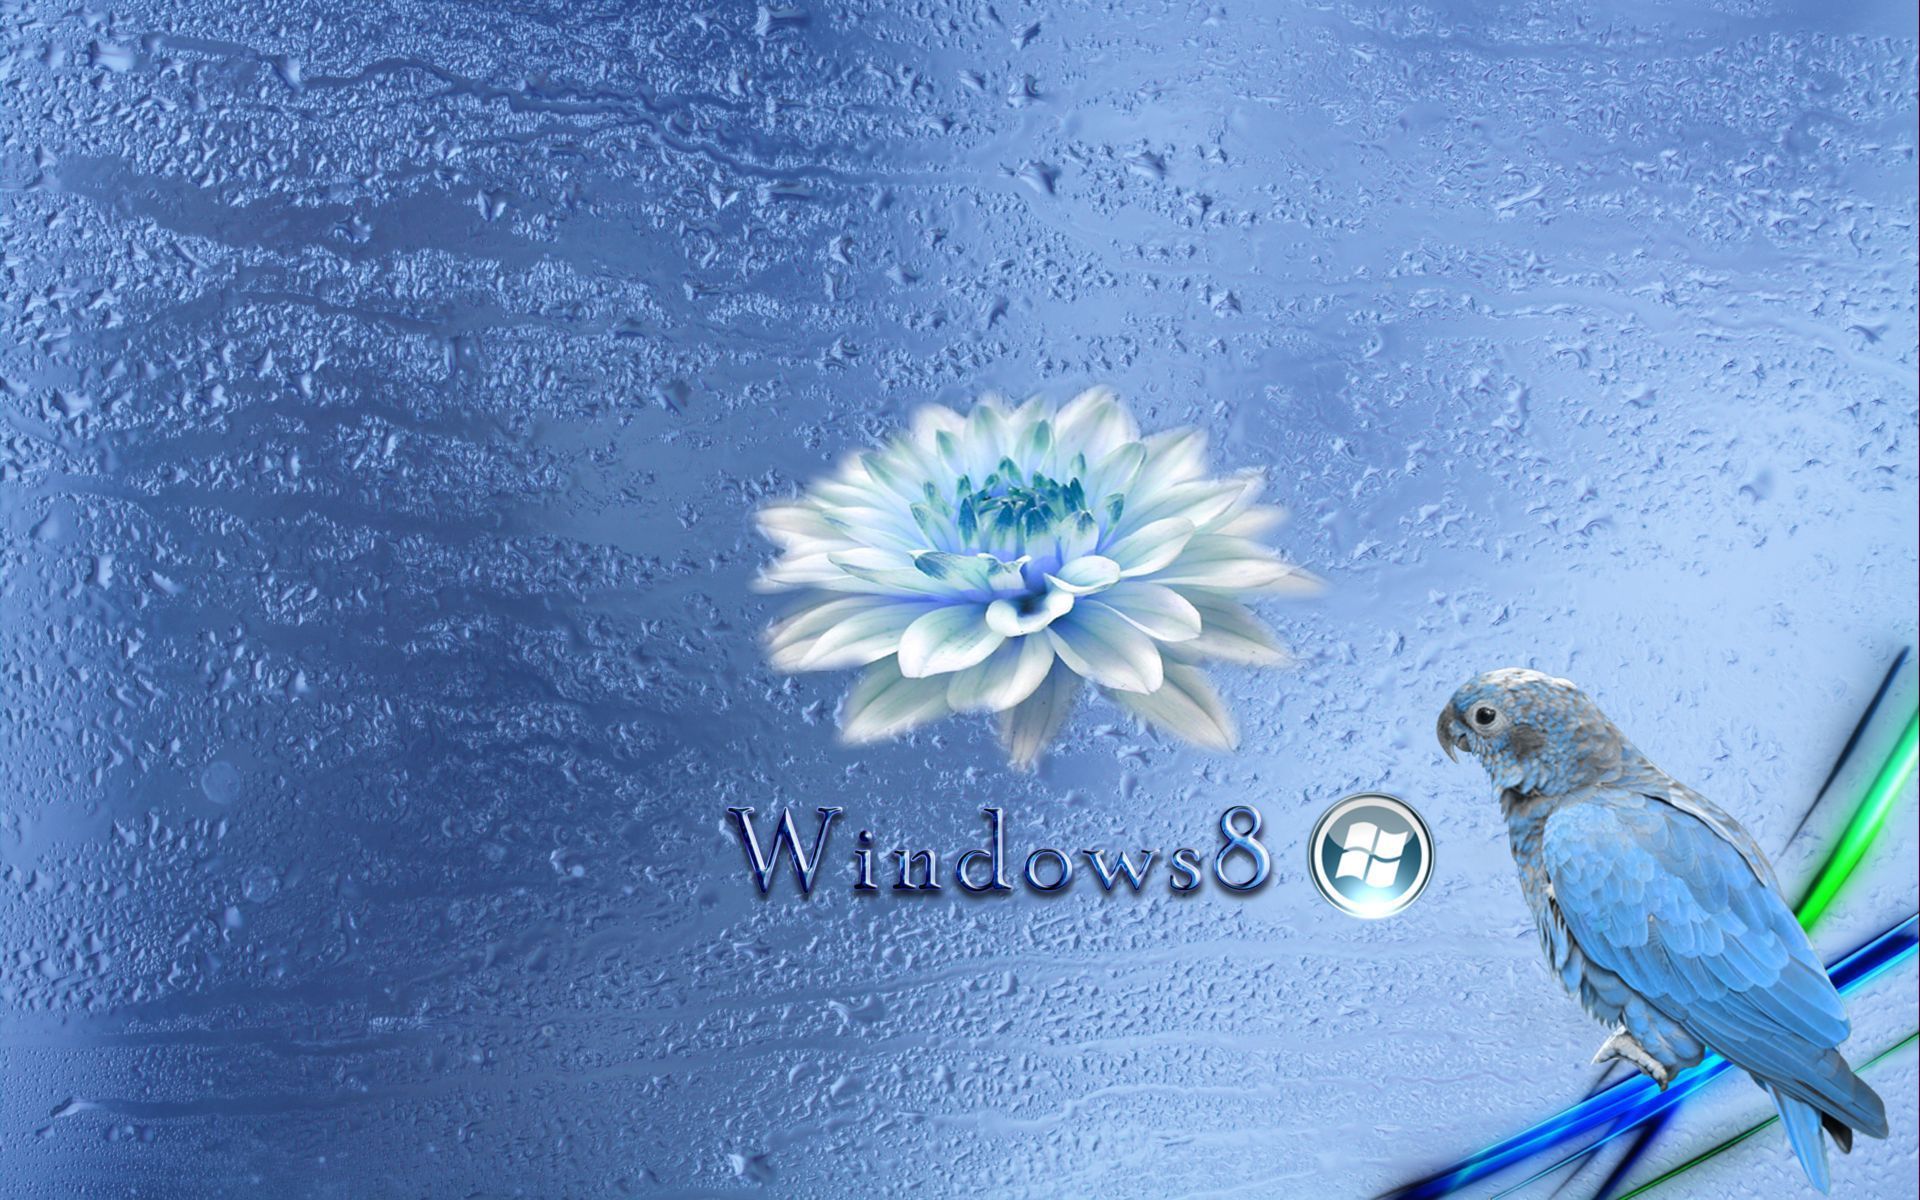 Windows 8 HD Wallpapers - Wallpaper Cave